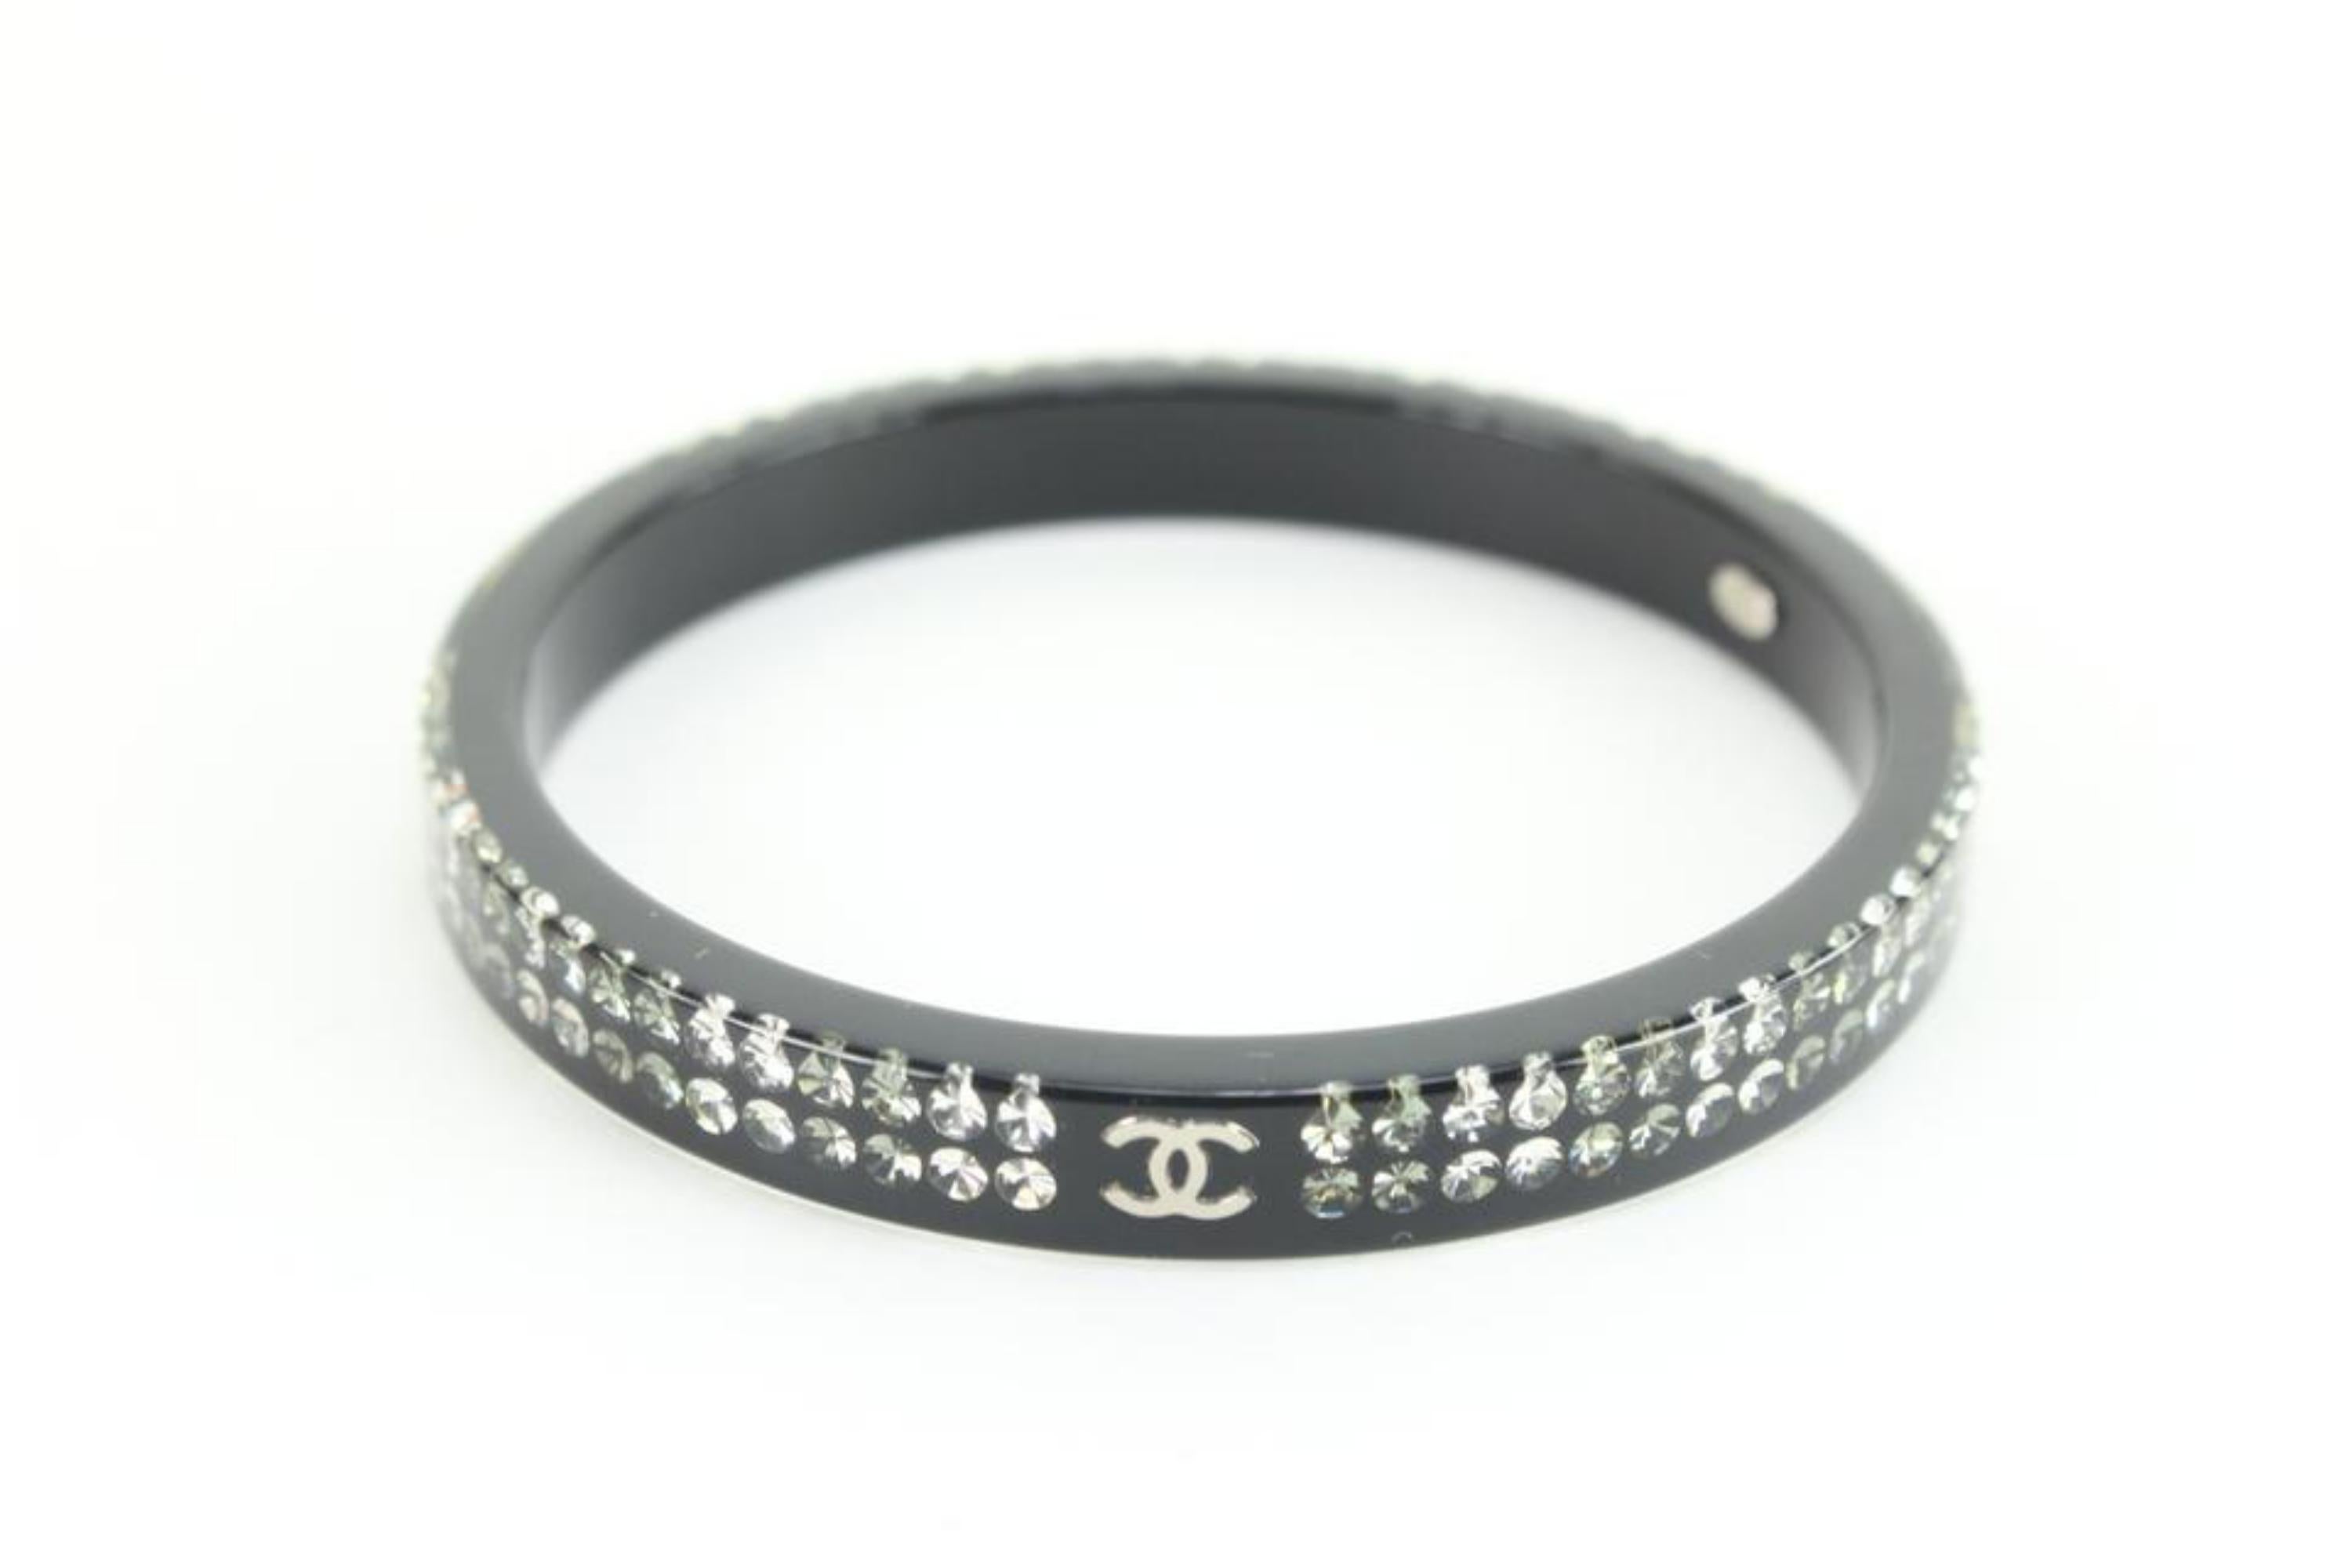 Chanel 2011 Black Crystal CC Logo Bangle Bracelet 26ck824s 5